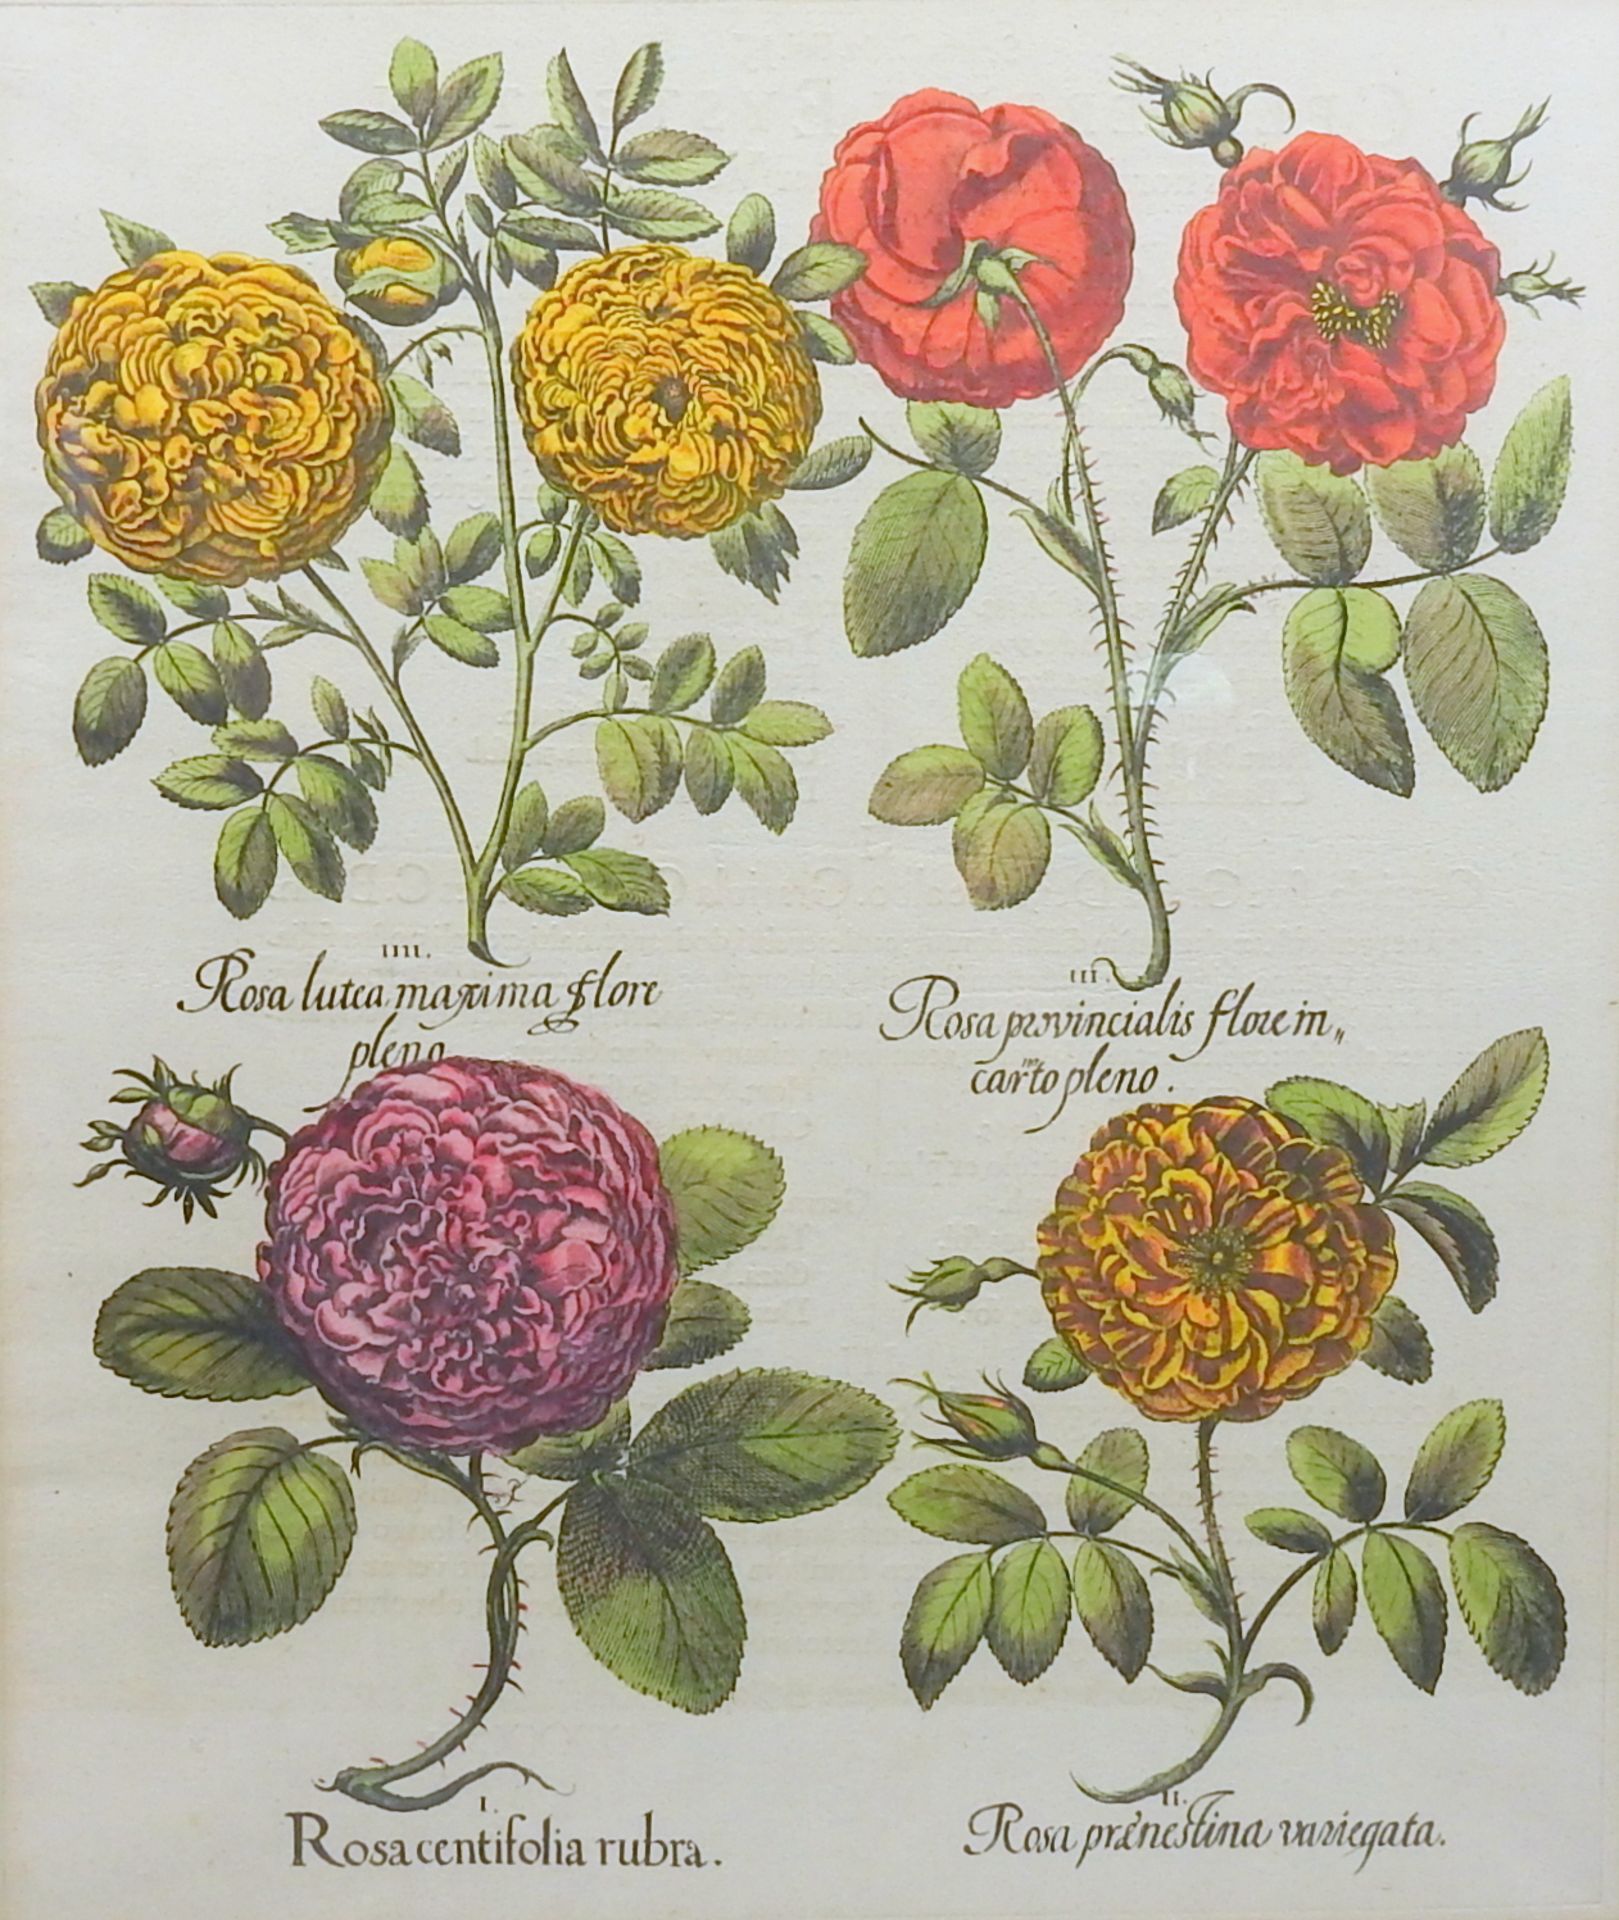 Rosa lutea maxima flore peno